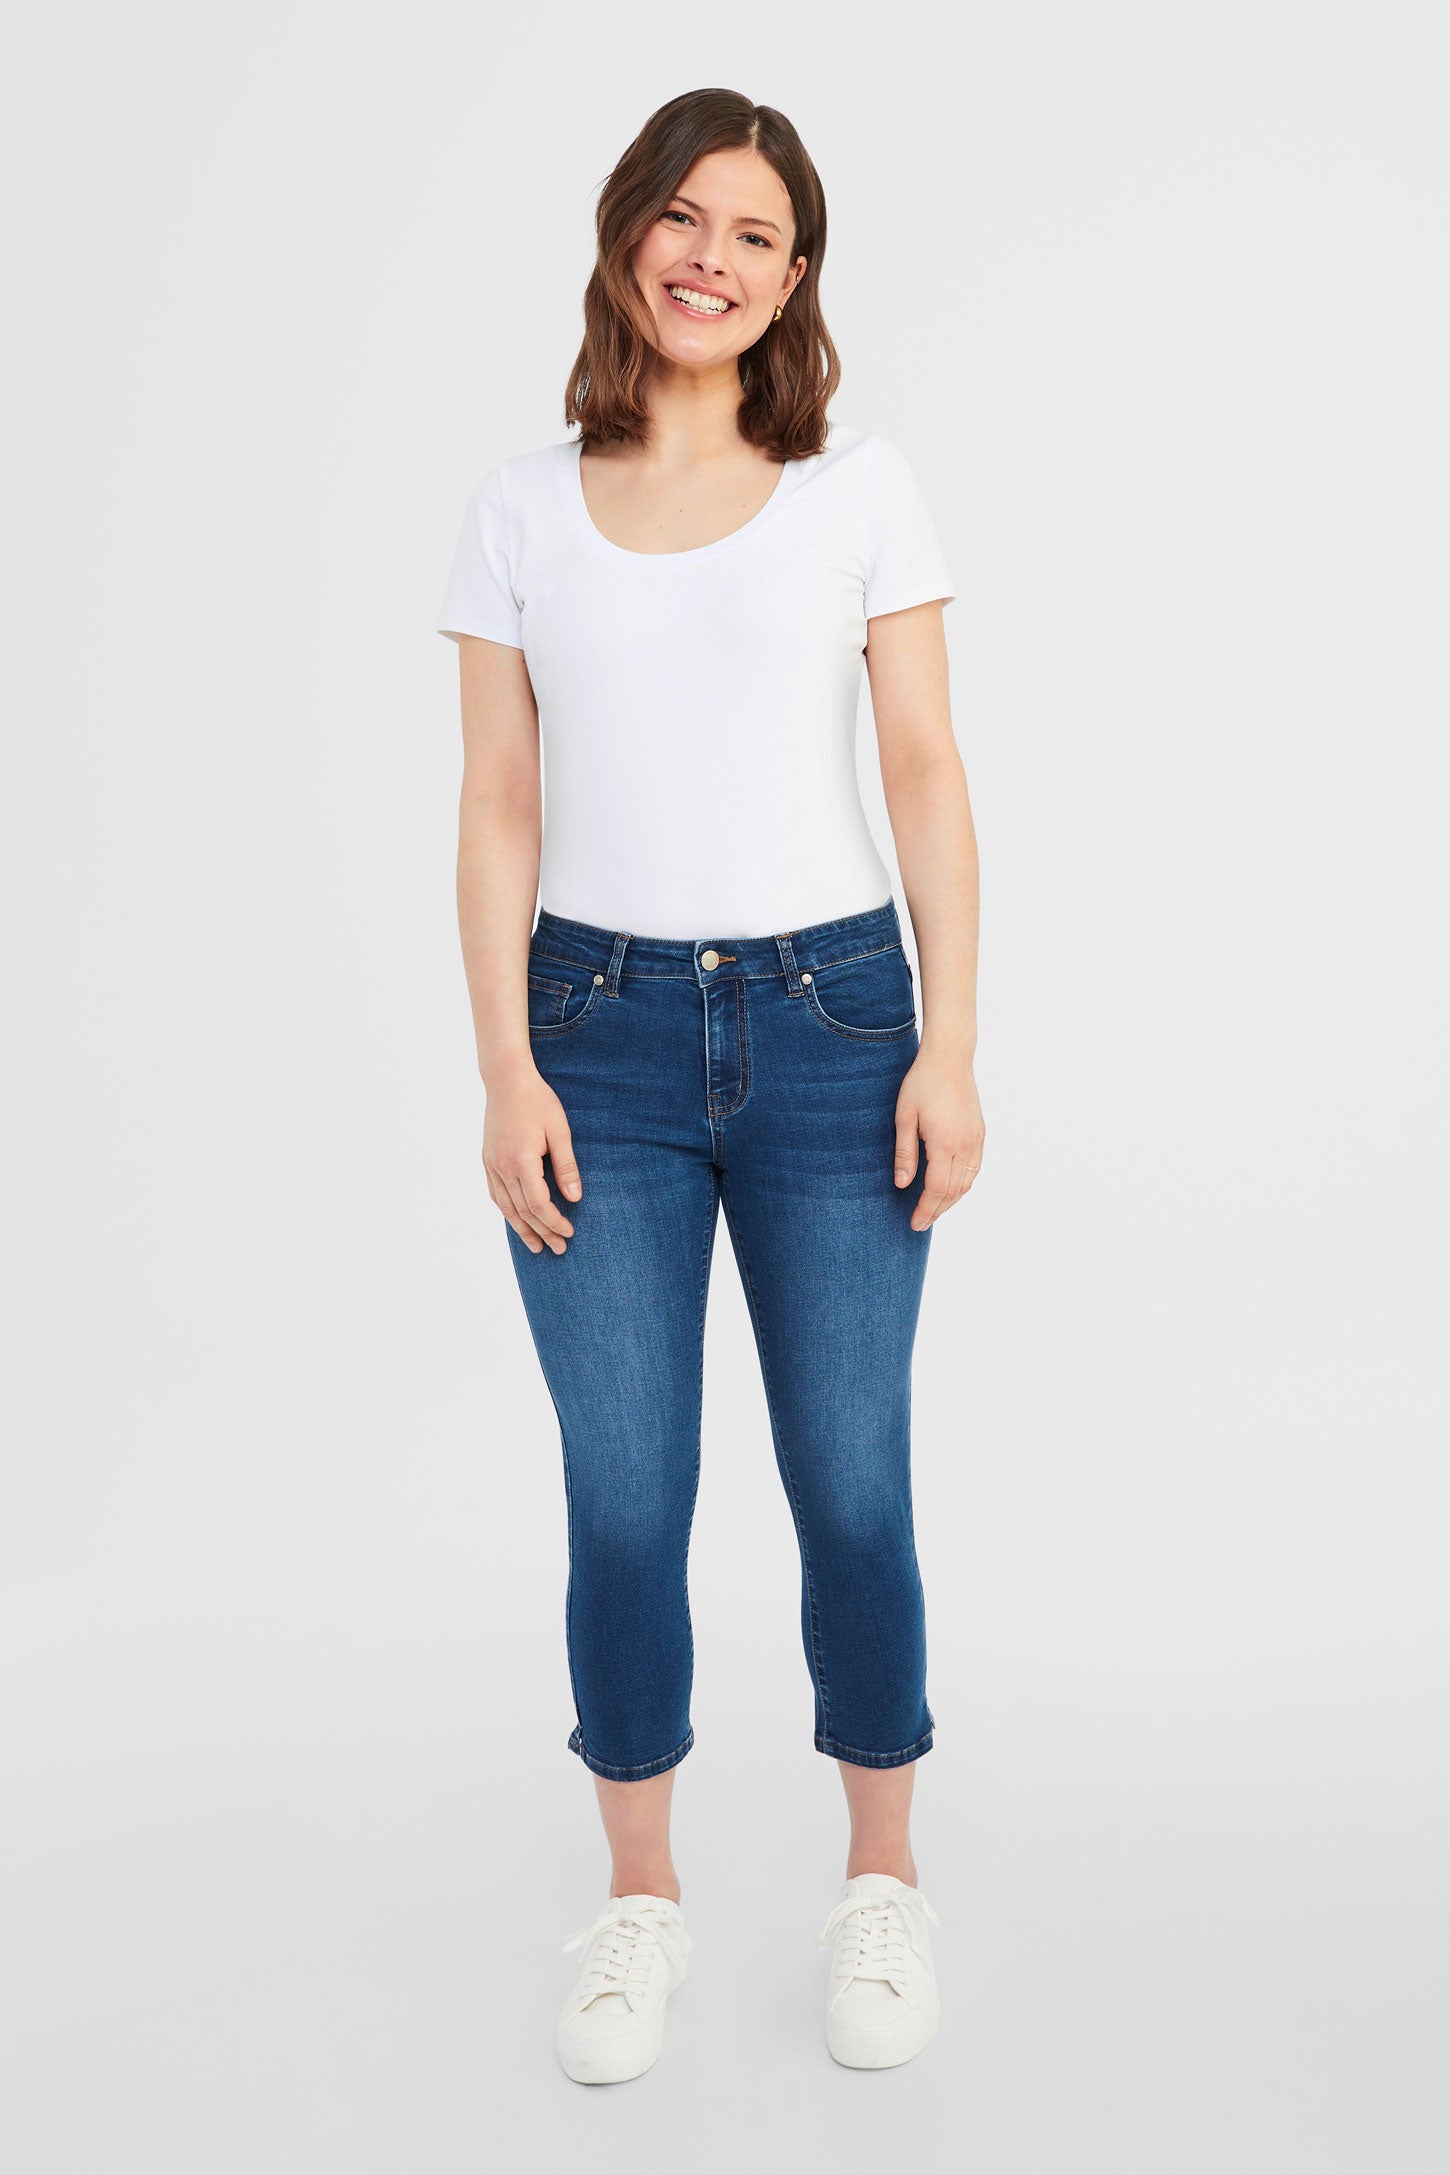 Capri 5 poches en jeans - Femme && BLEU MOYEN